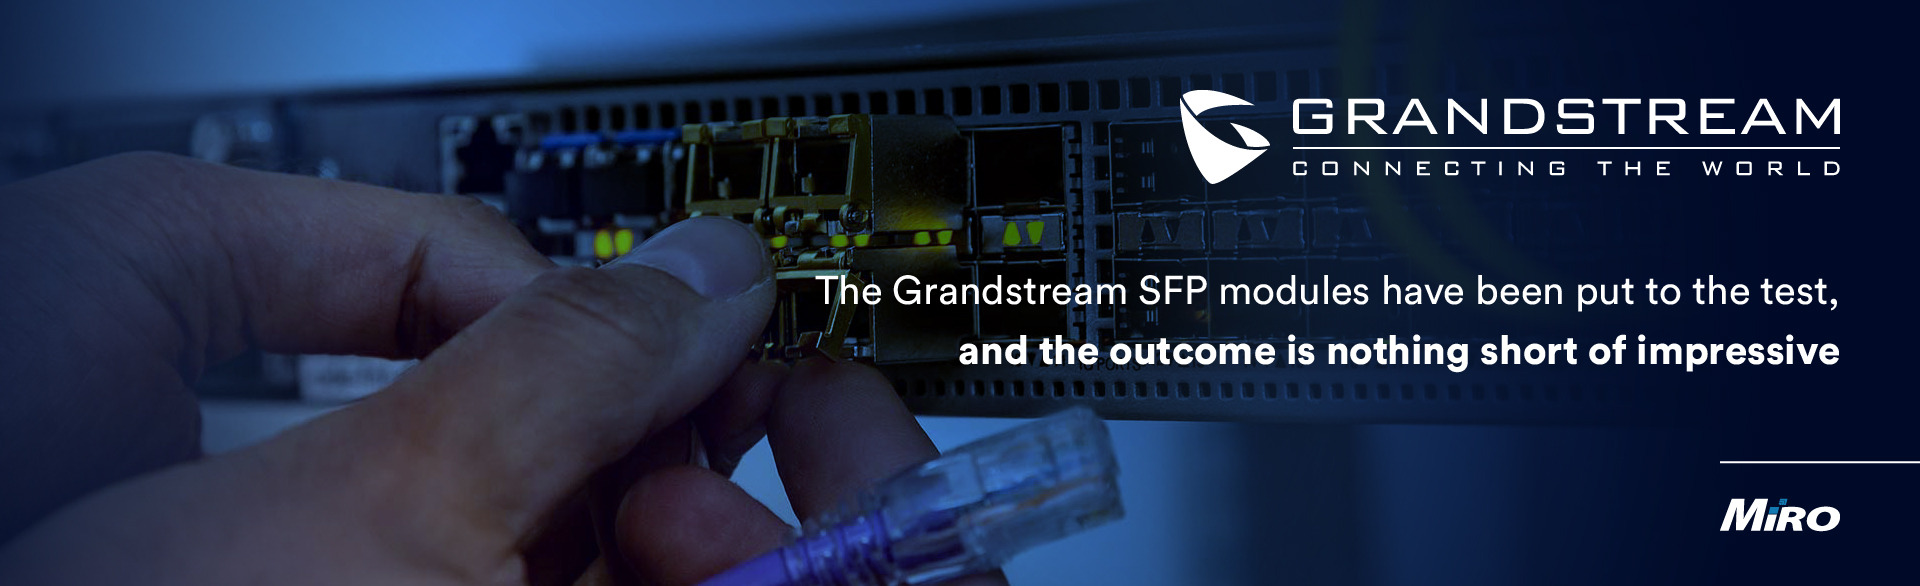 Testing Grandstream’s New SFP Modules 